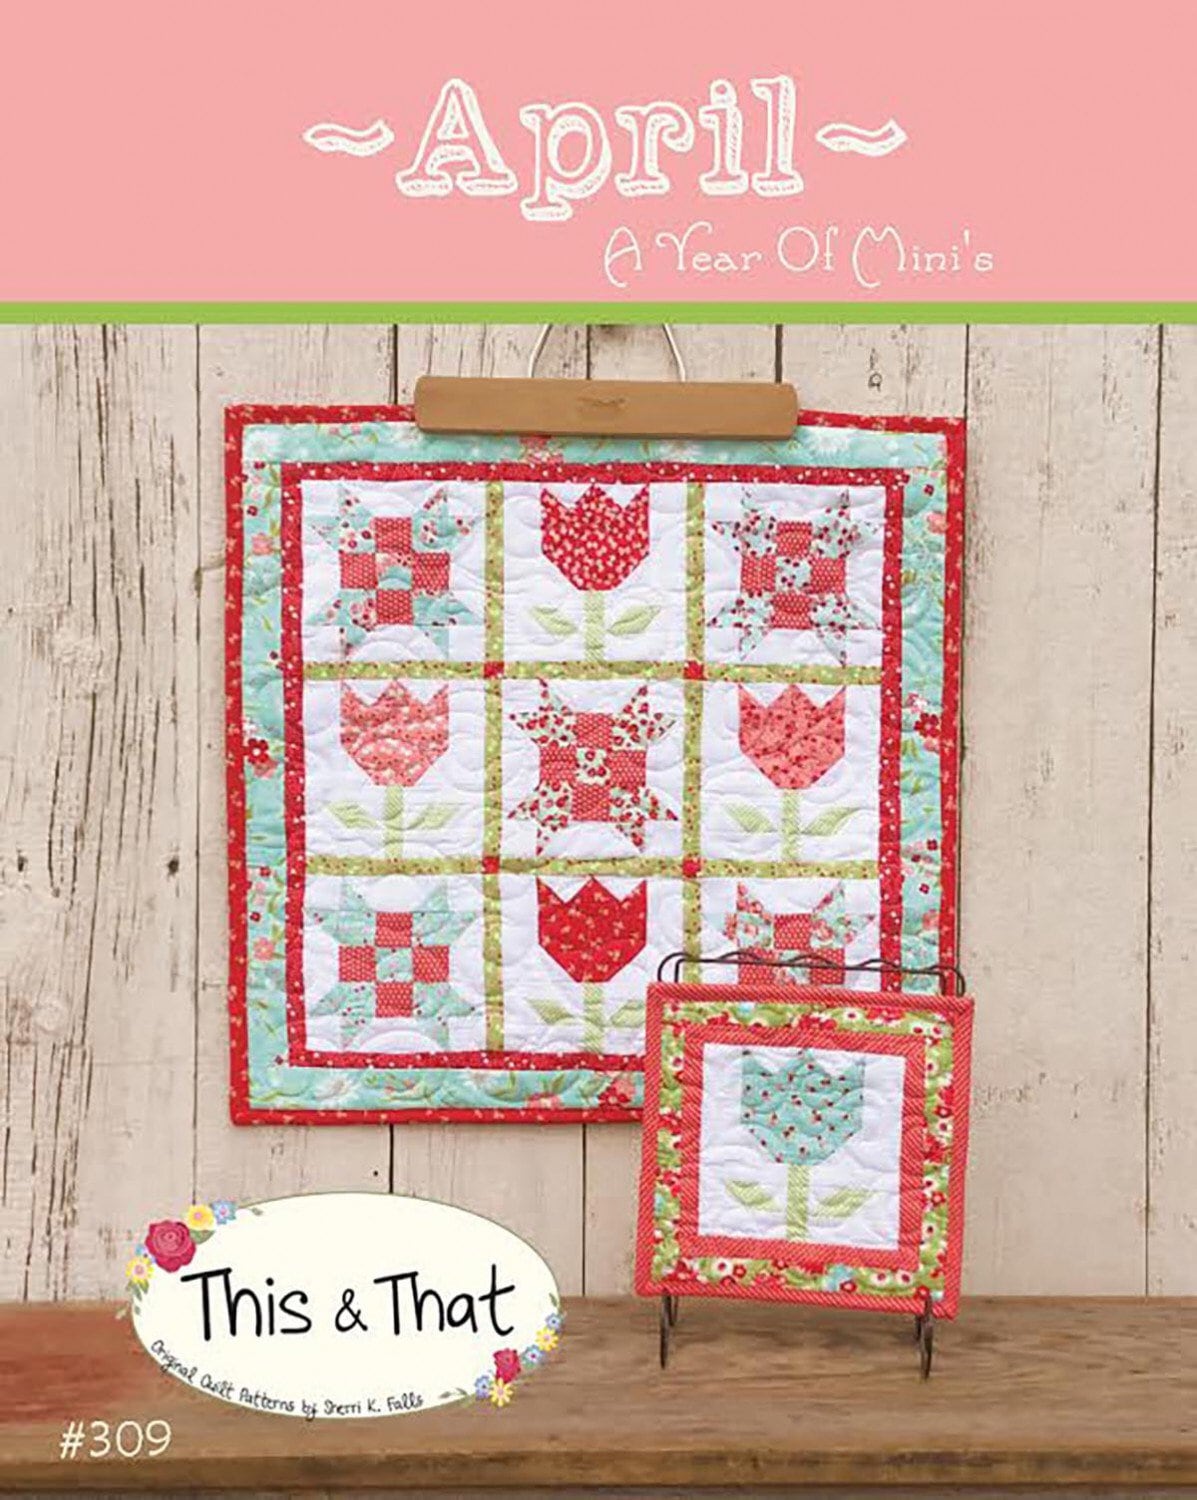 A Year of Minis - April Mini Quilt Pattern - This & That - Sherri Falls